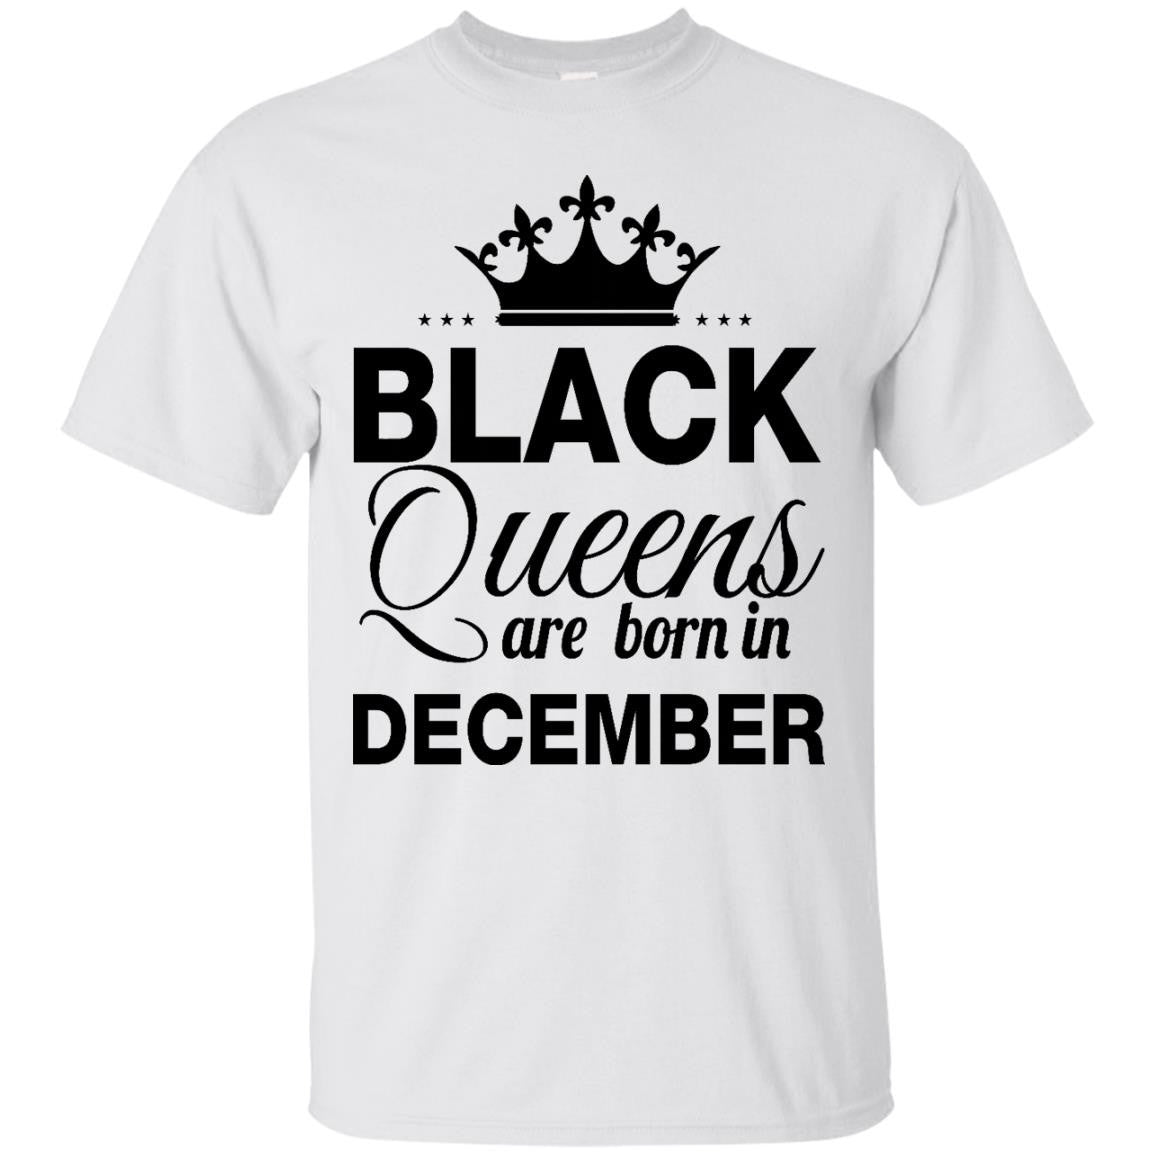 Black Queen are born in December shirt, tank top, hoodie